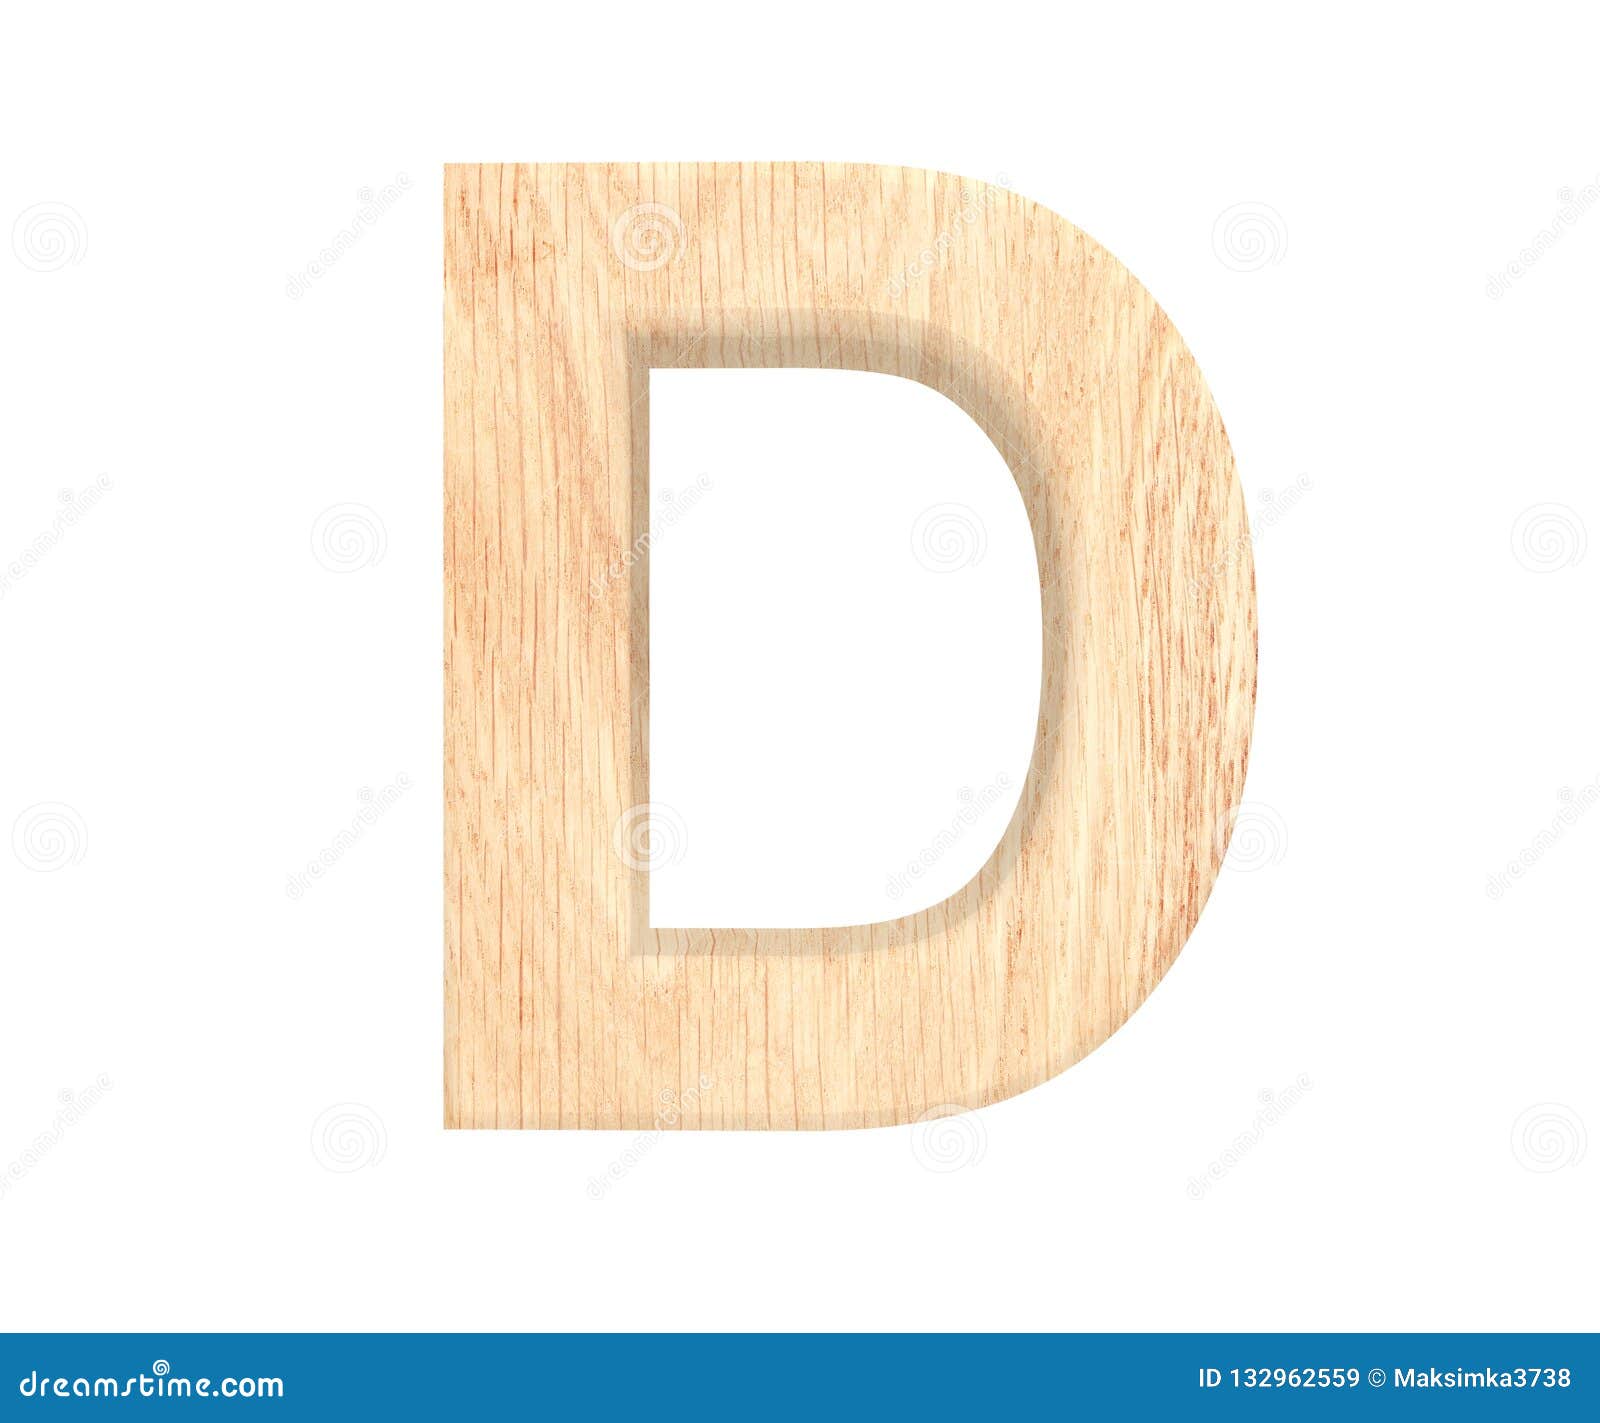 3D Decorative Wood Alphabet, Capital Letter D. Stock Image - Image of ...